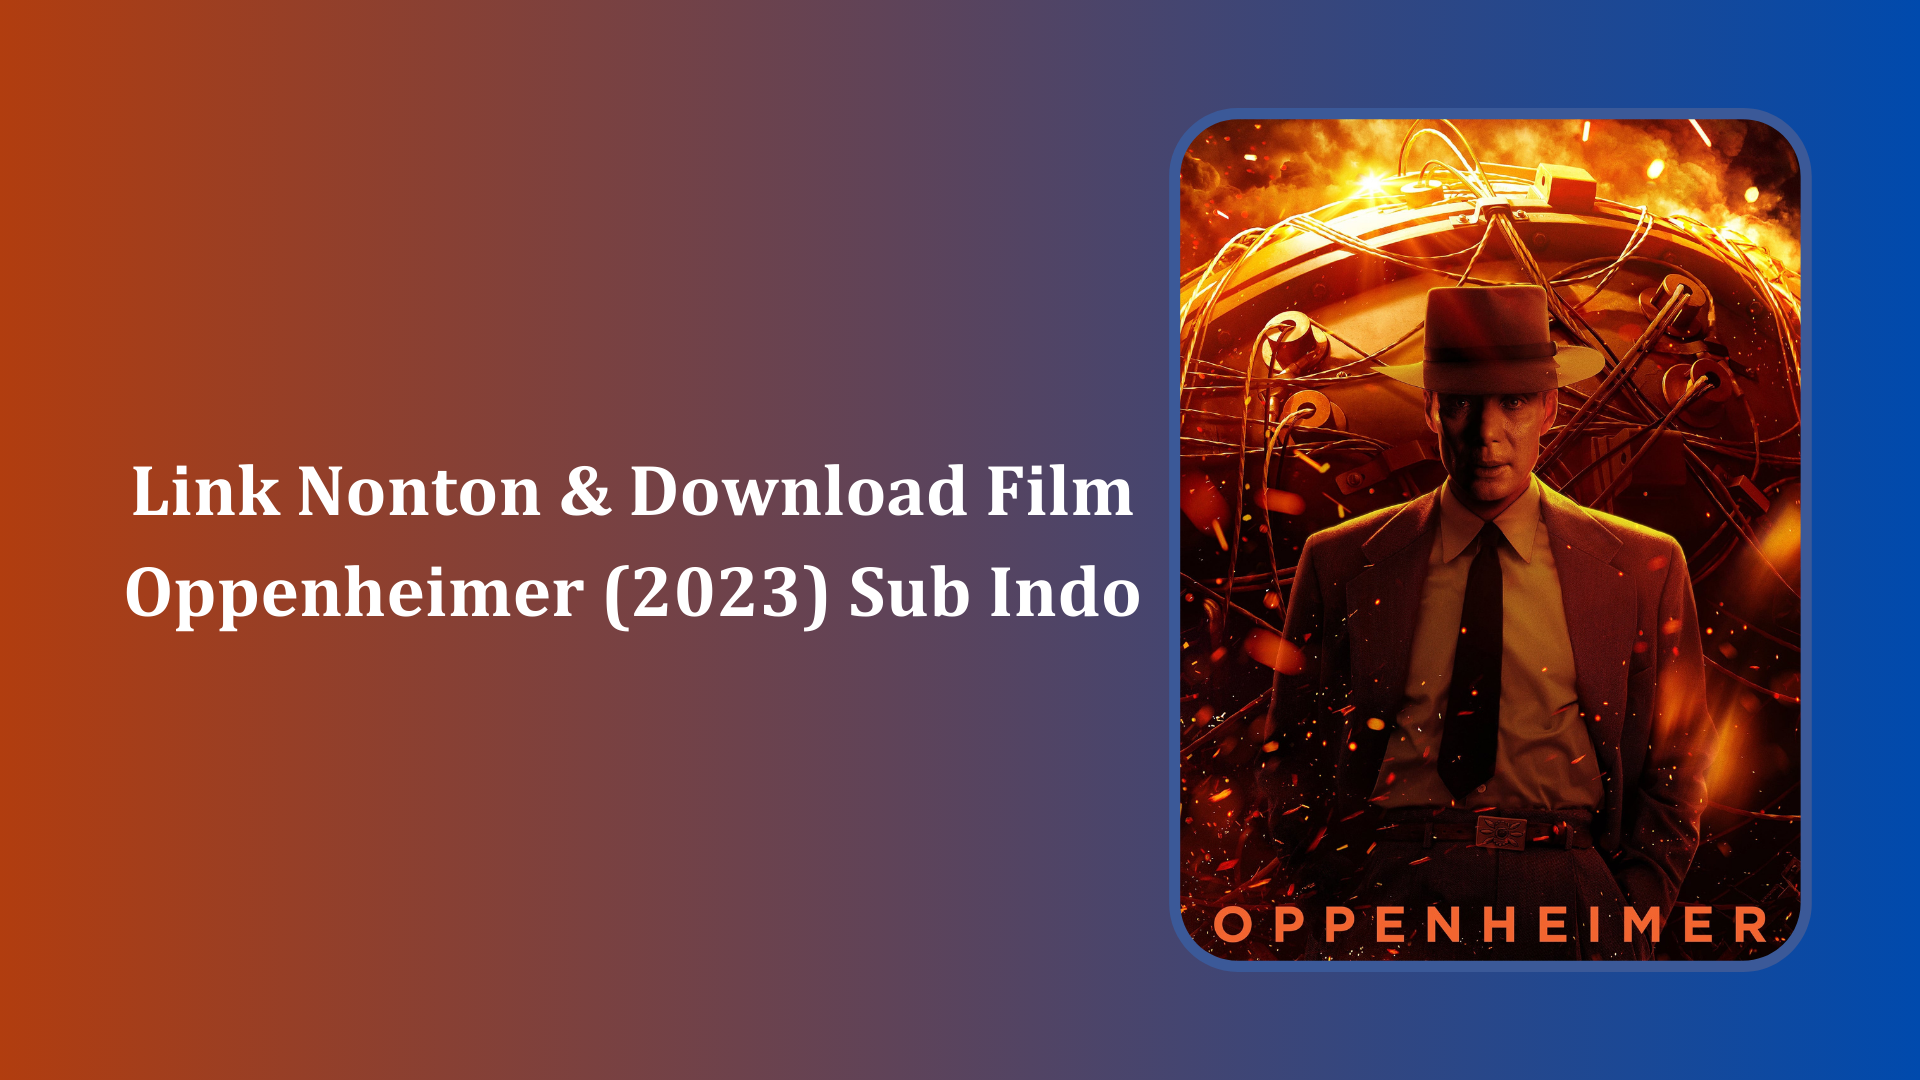 Link Nonton & Download Film Oppenheimer (2023) Sub Indo